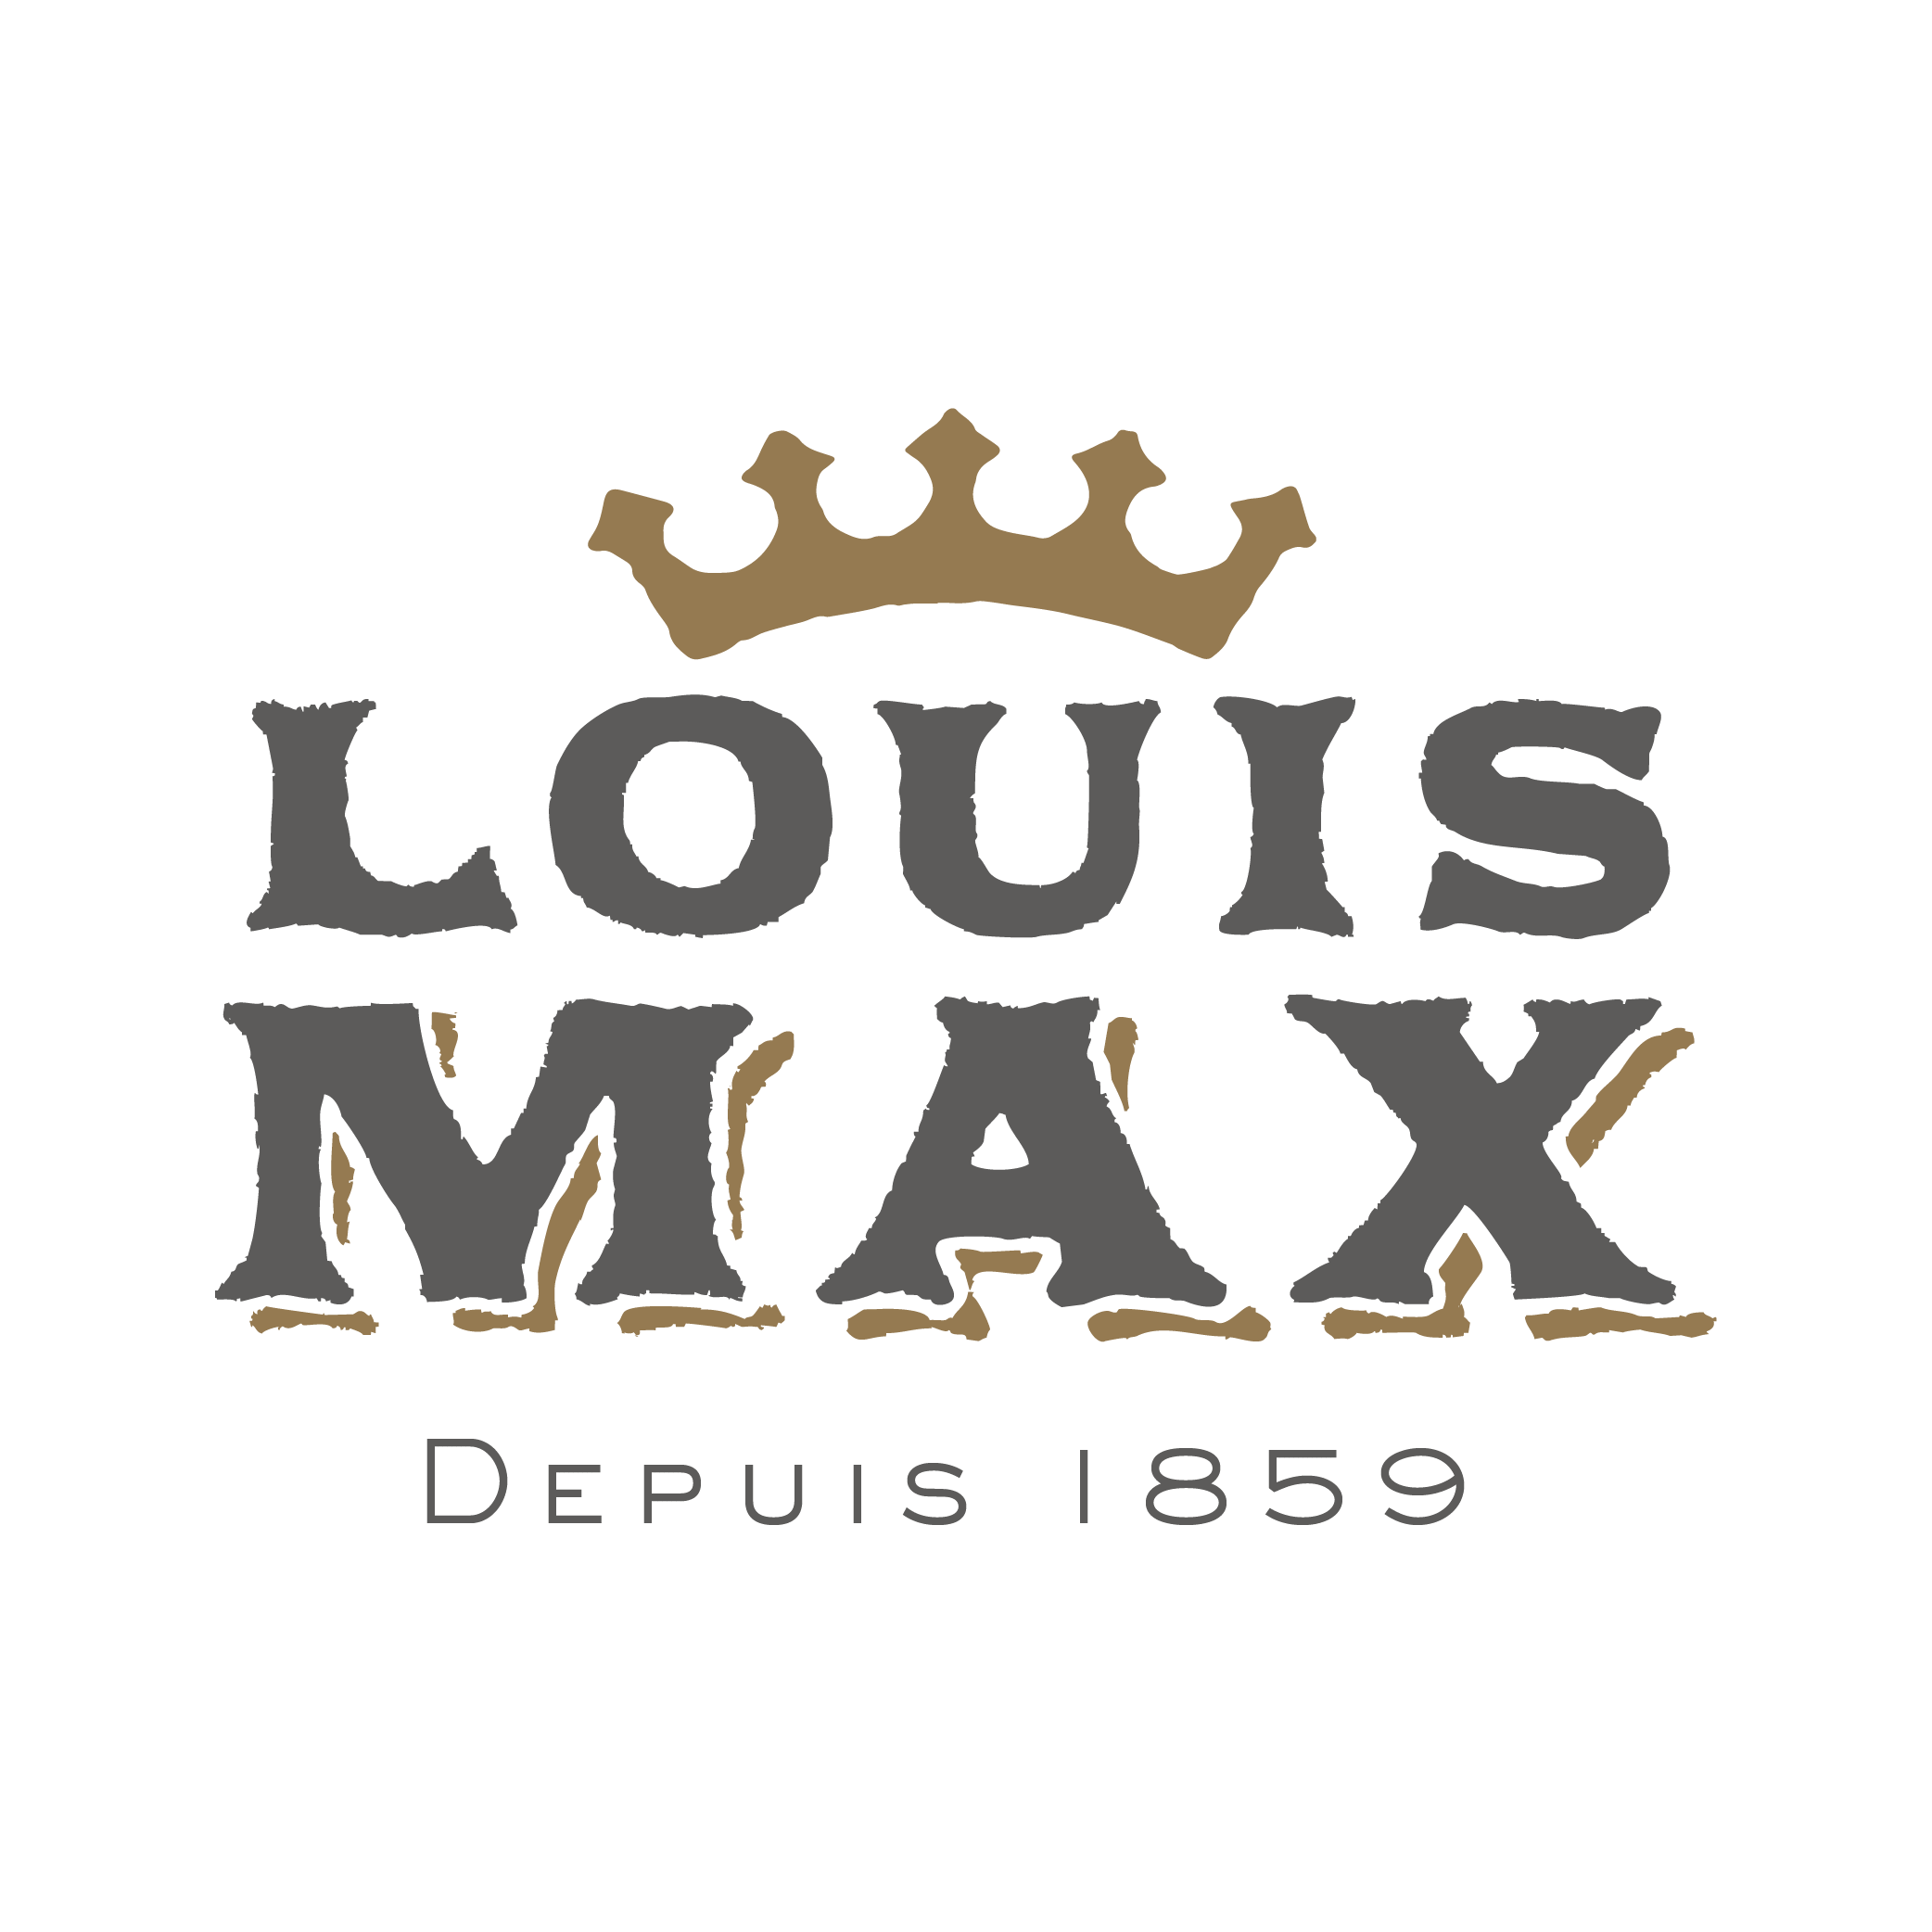 Louis Max